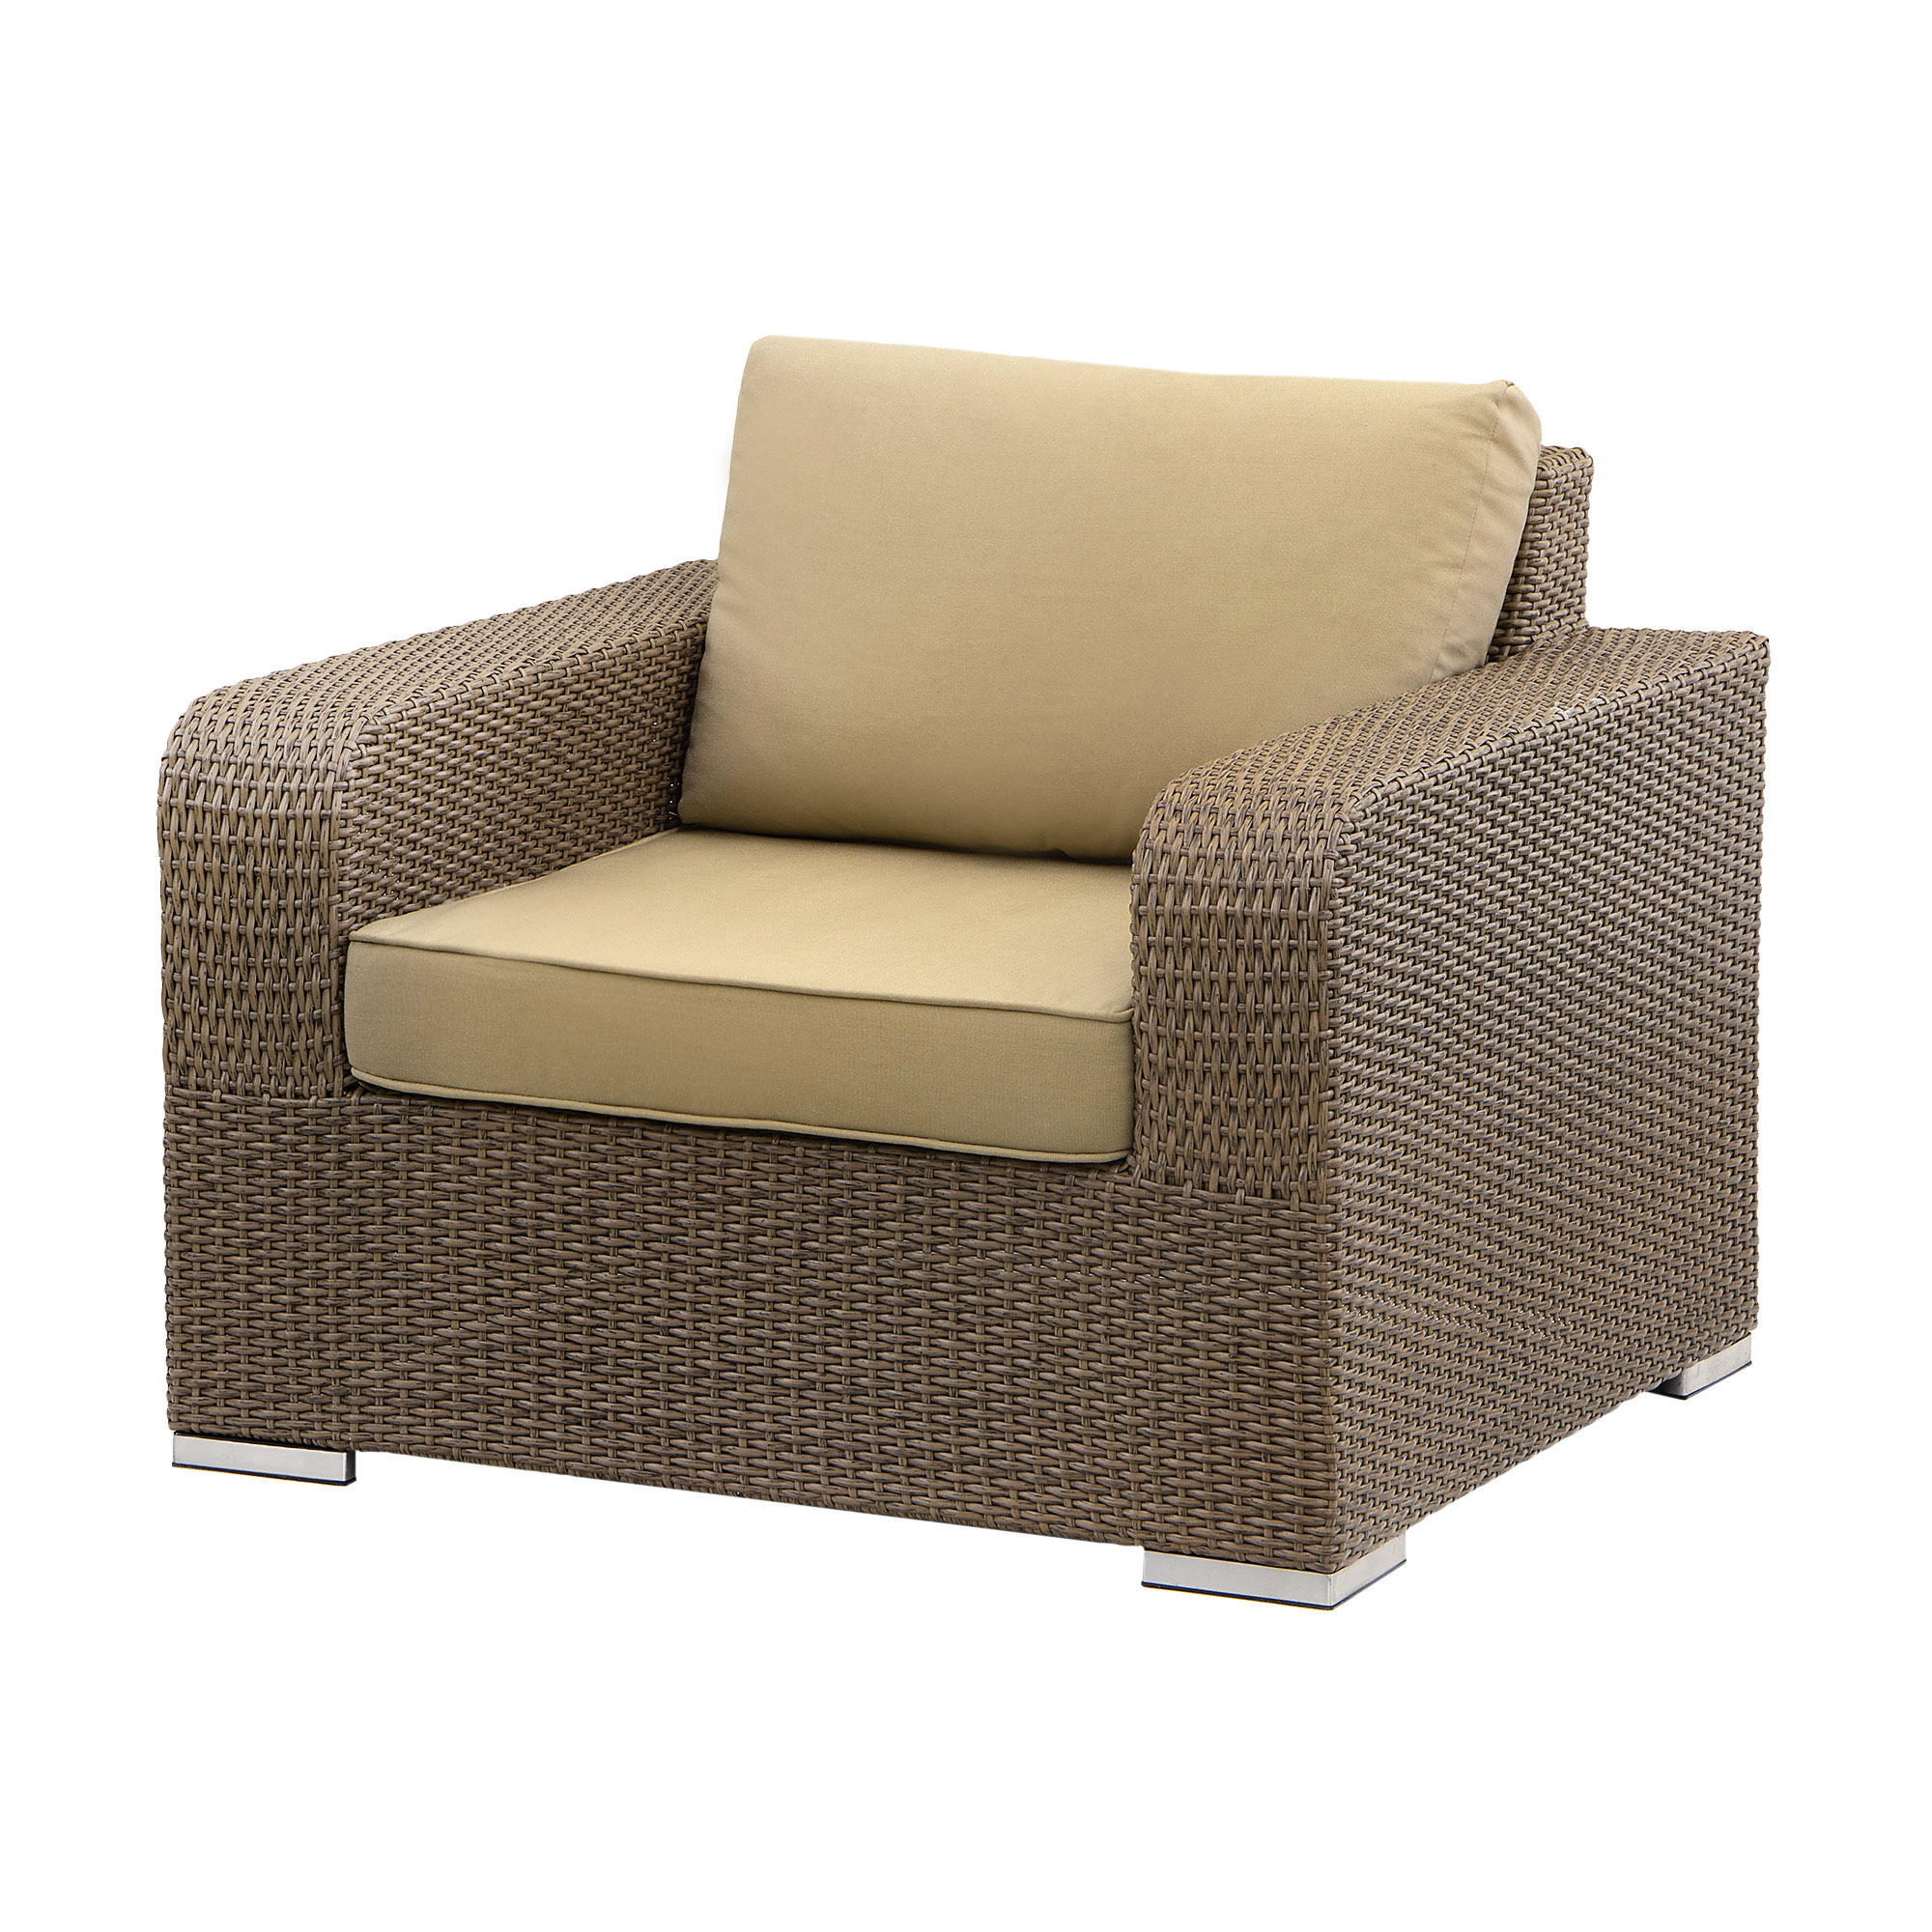 Комплект мебели Mavi Rattan 012 dkst, цвет бежевый, размер диван трехместный 90х224х76 см, диван двухместный 90х159х76 см - фото 4